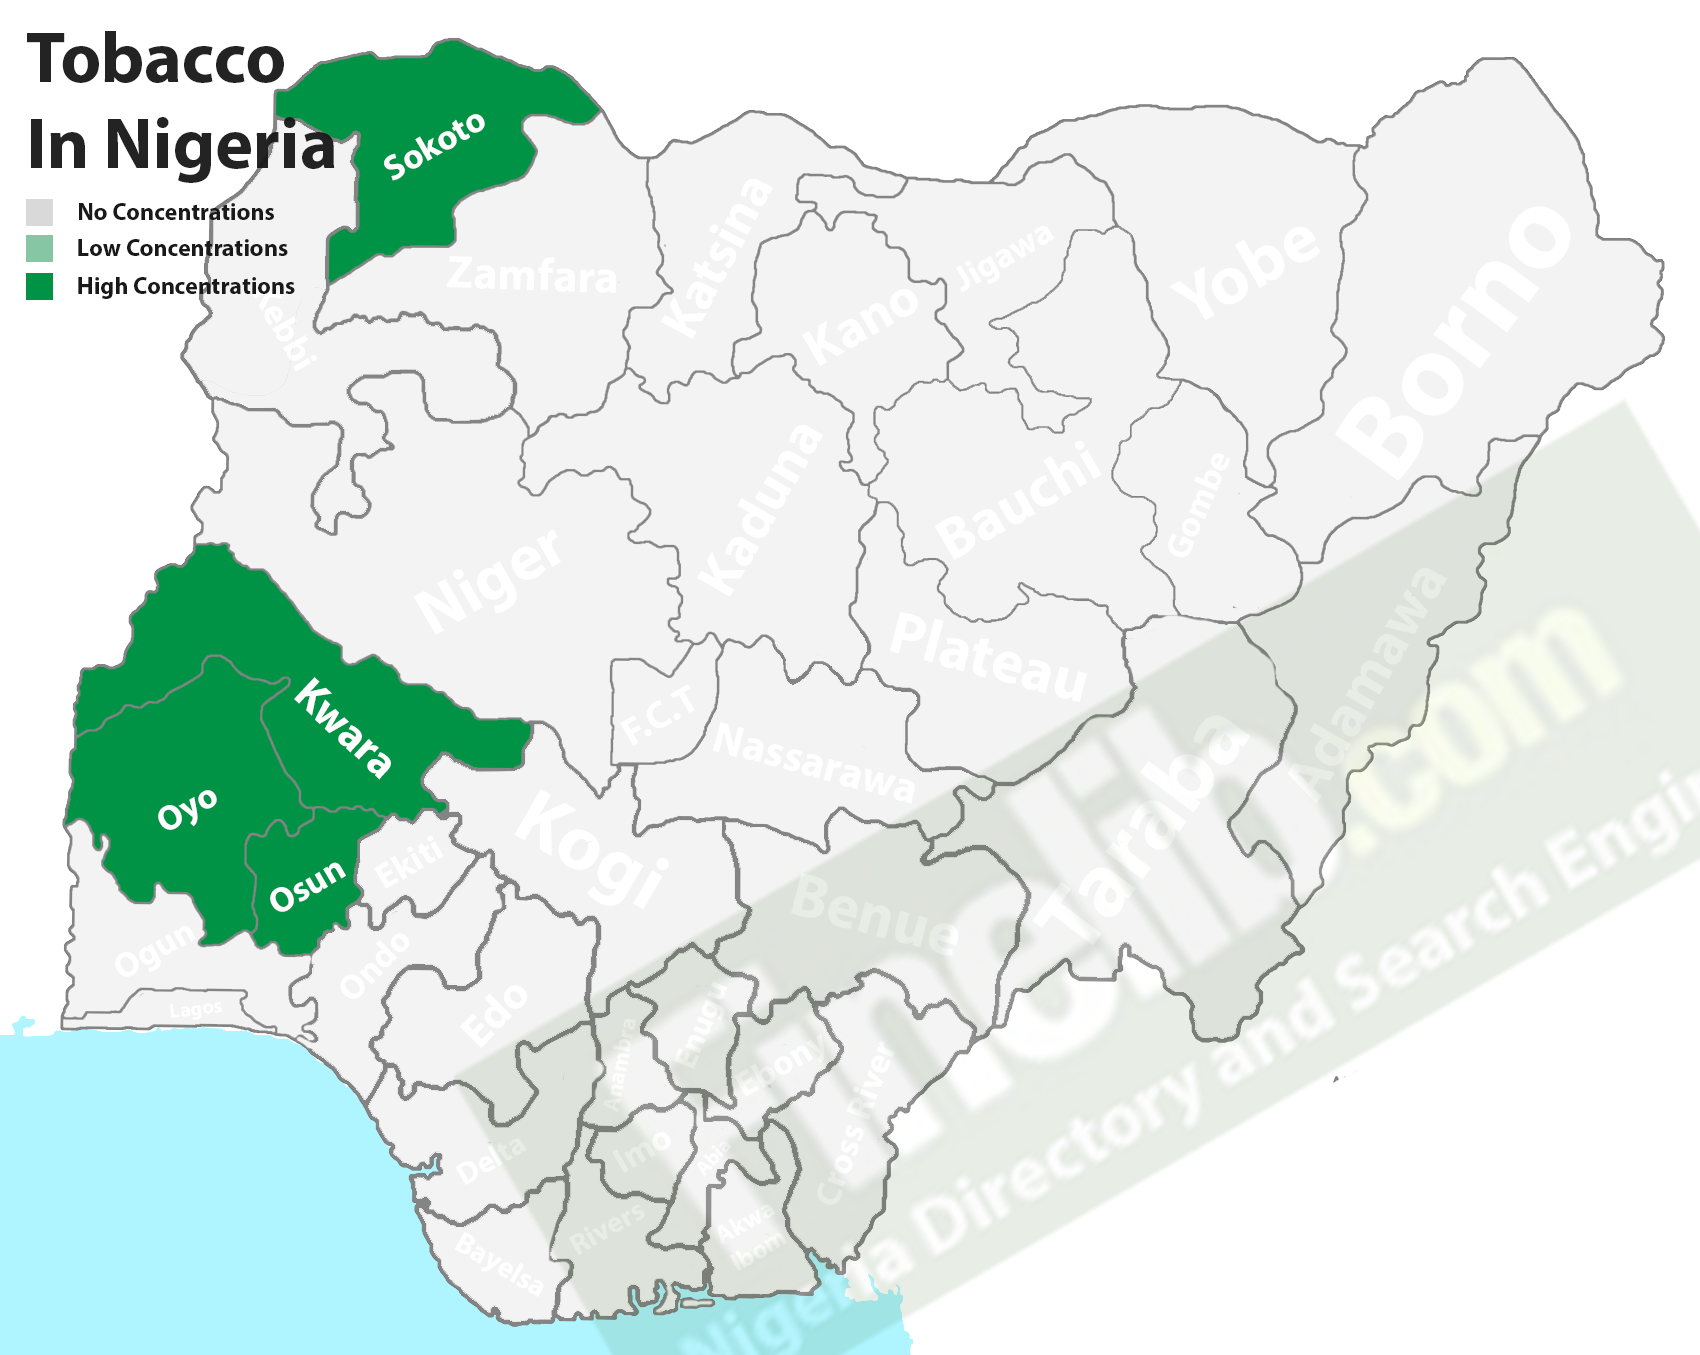 Tobacco producing states in Nigeria